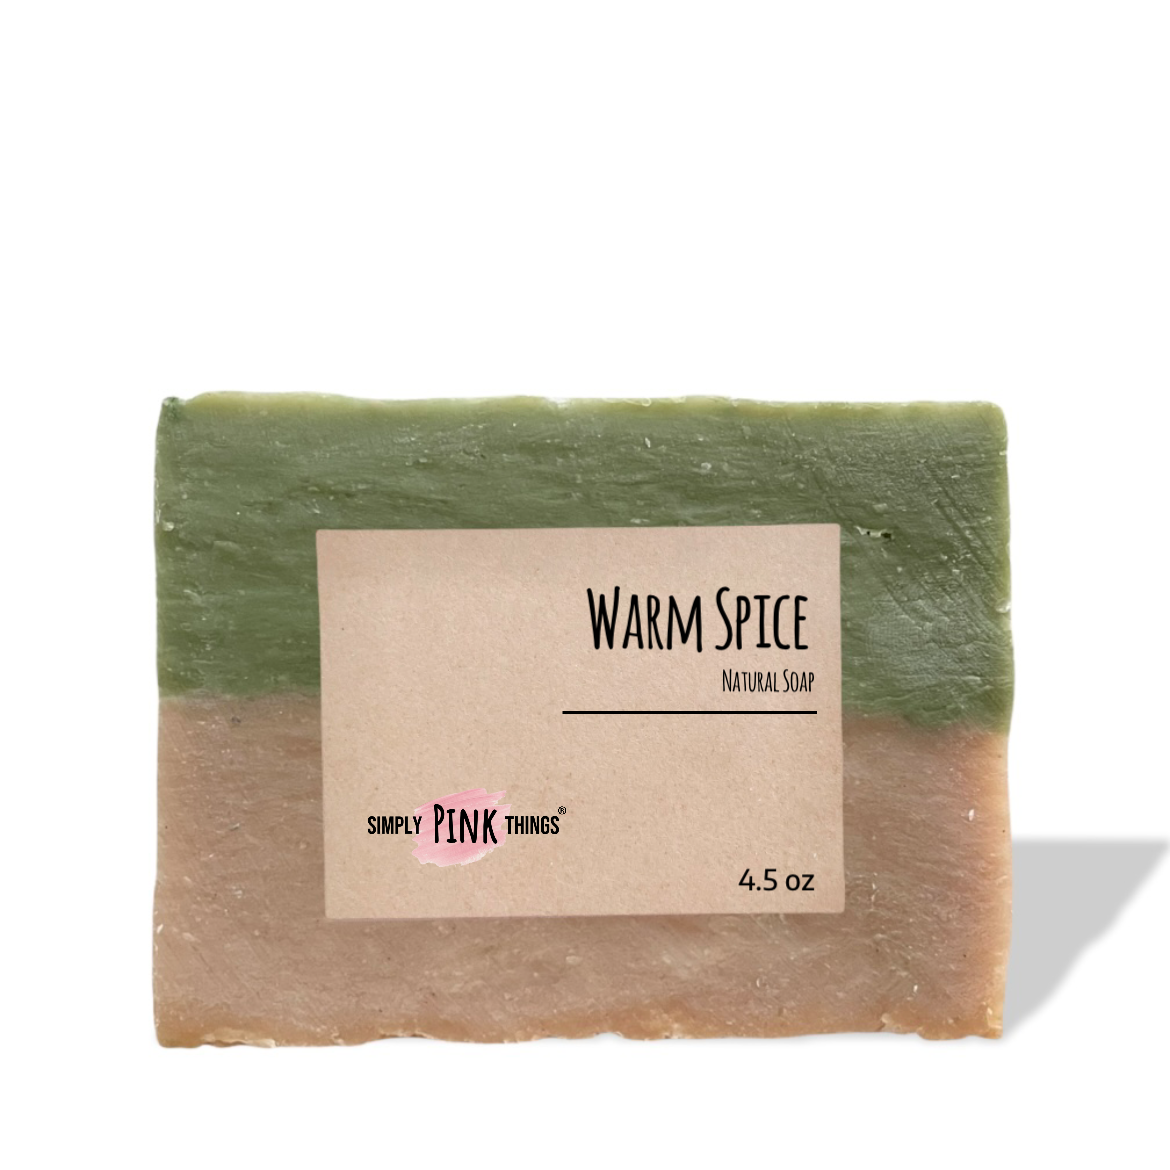 Warm Spice Natural Soap (4.5 oz.)